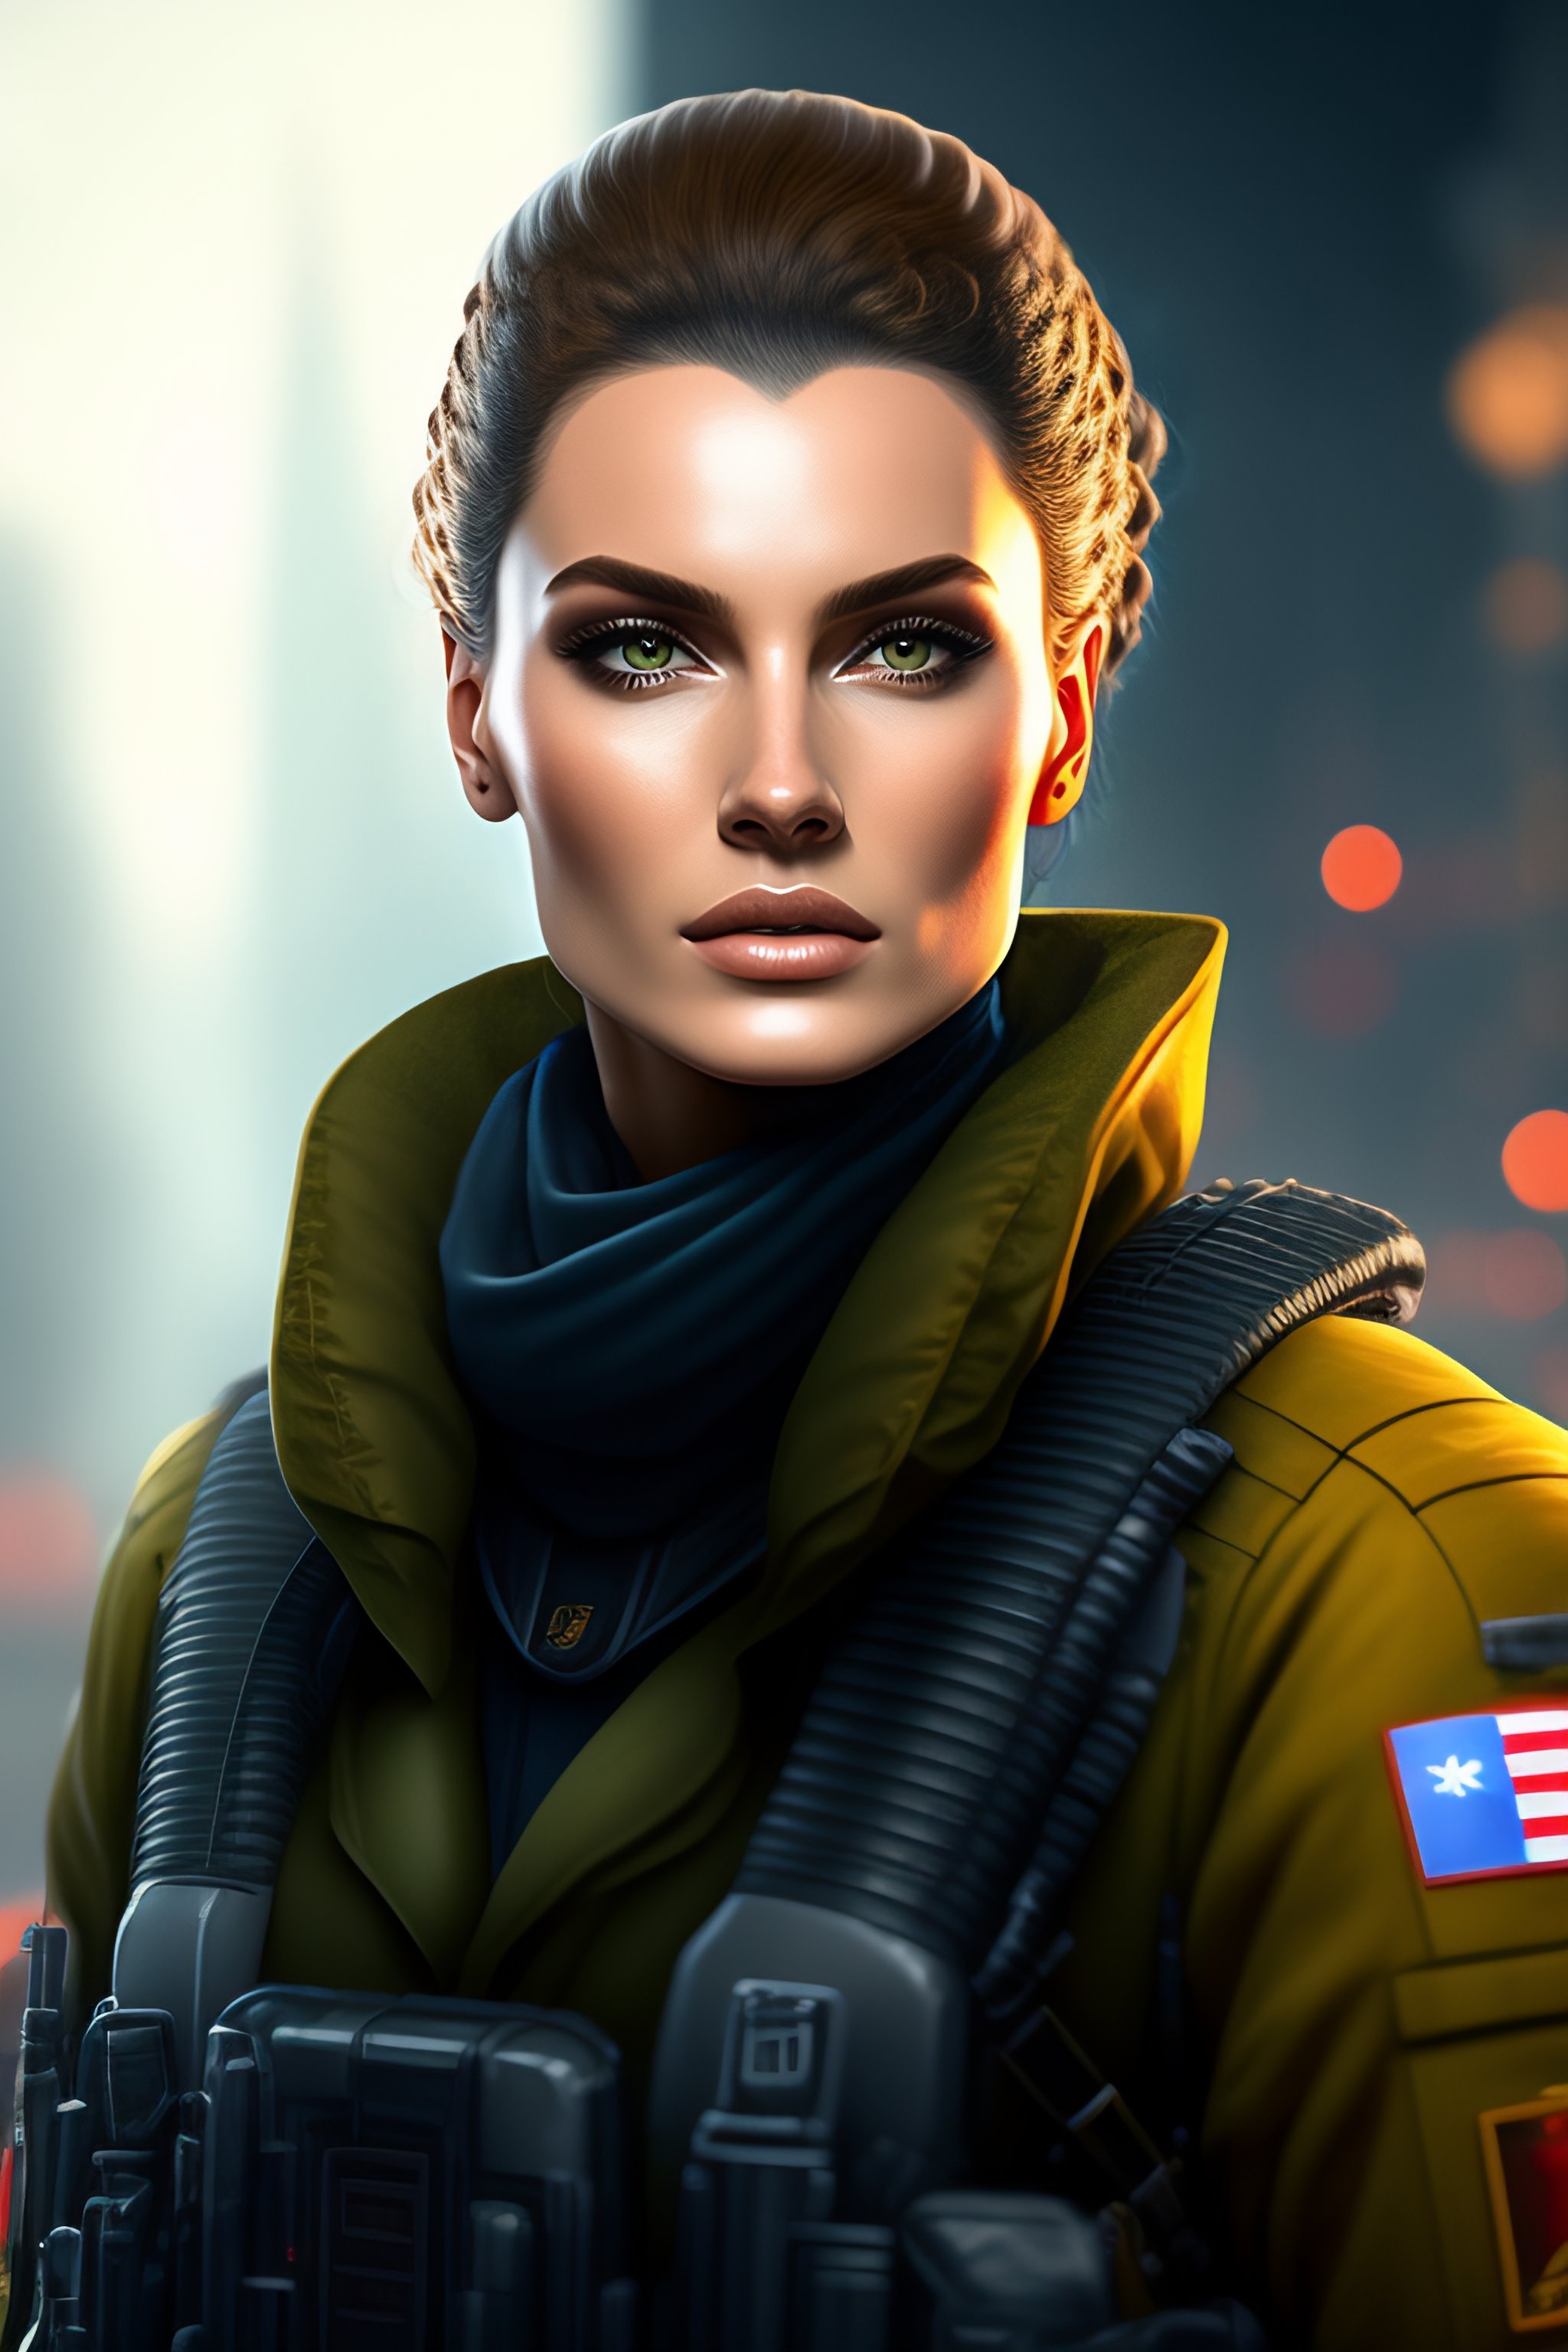 Lexica - Russian sci-fi soldier portrait